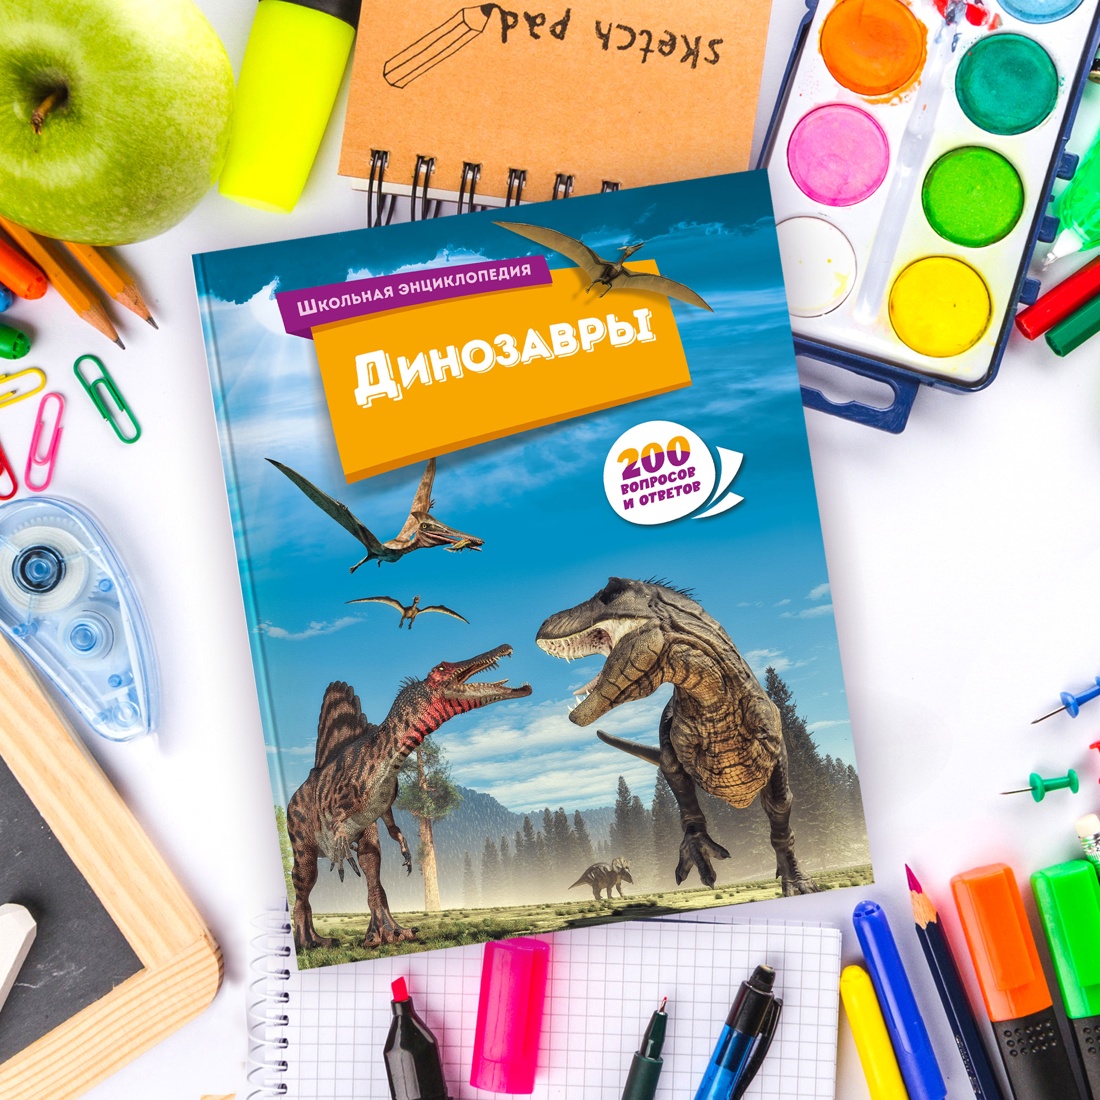 Промо материал к книге "Динозавры" №6